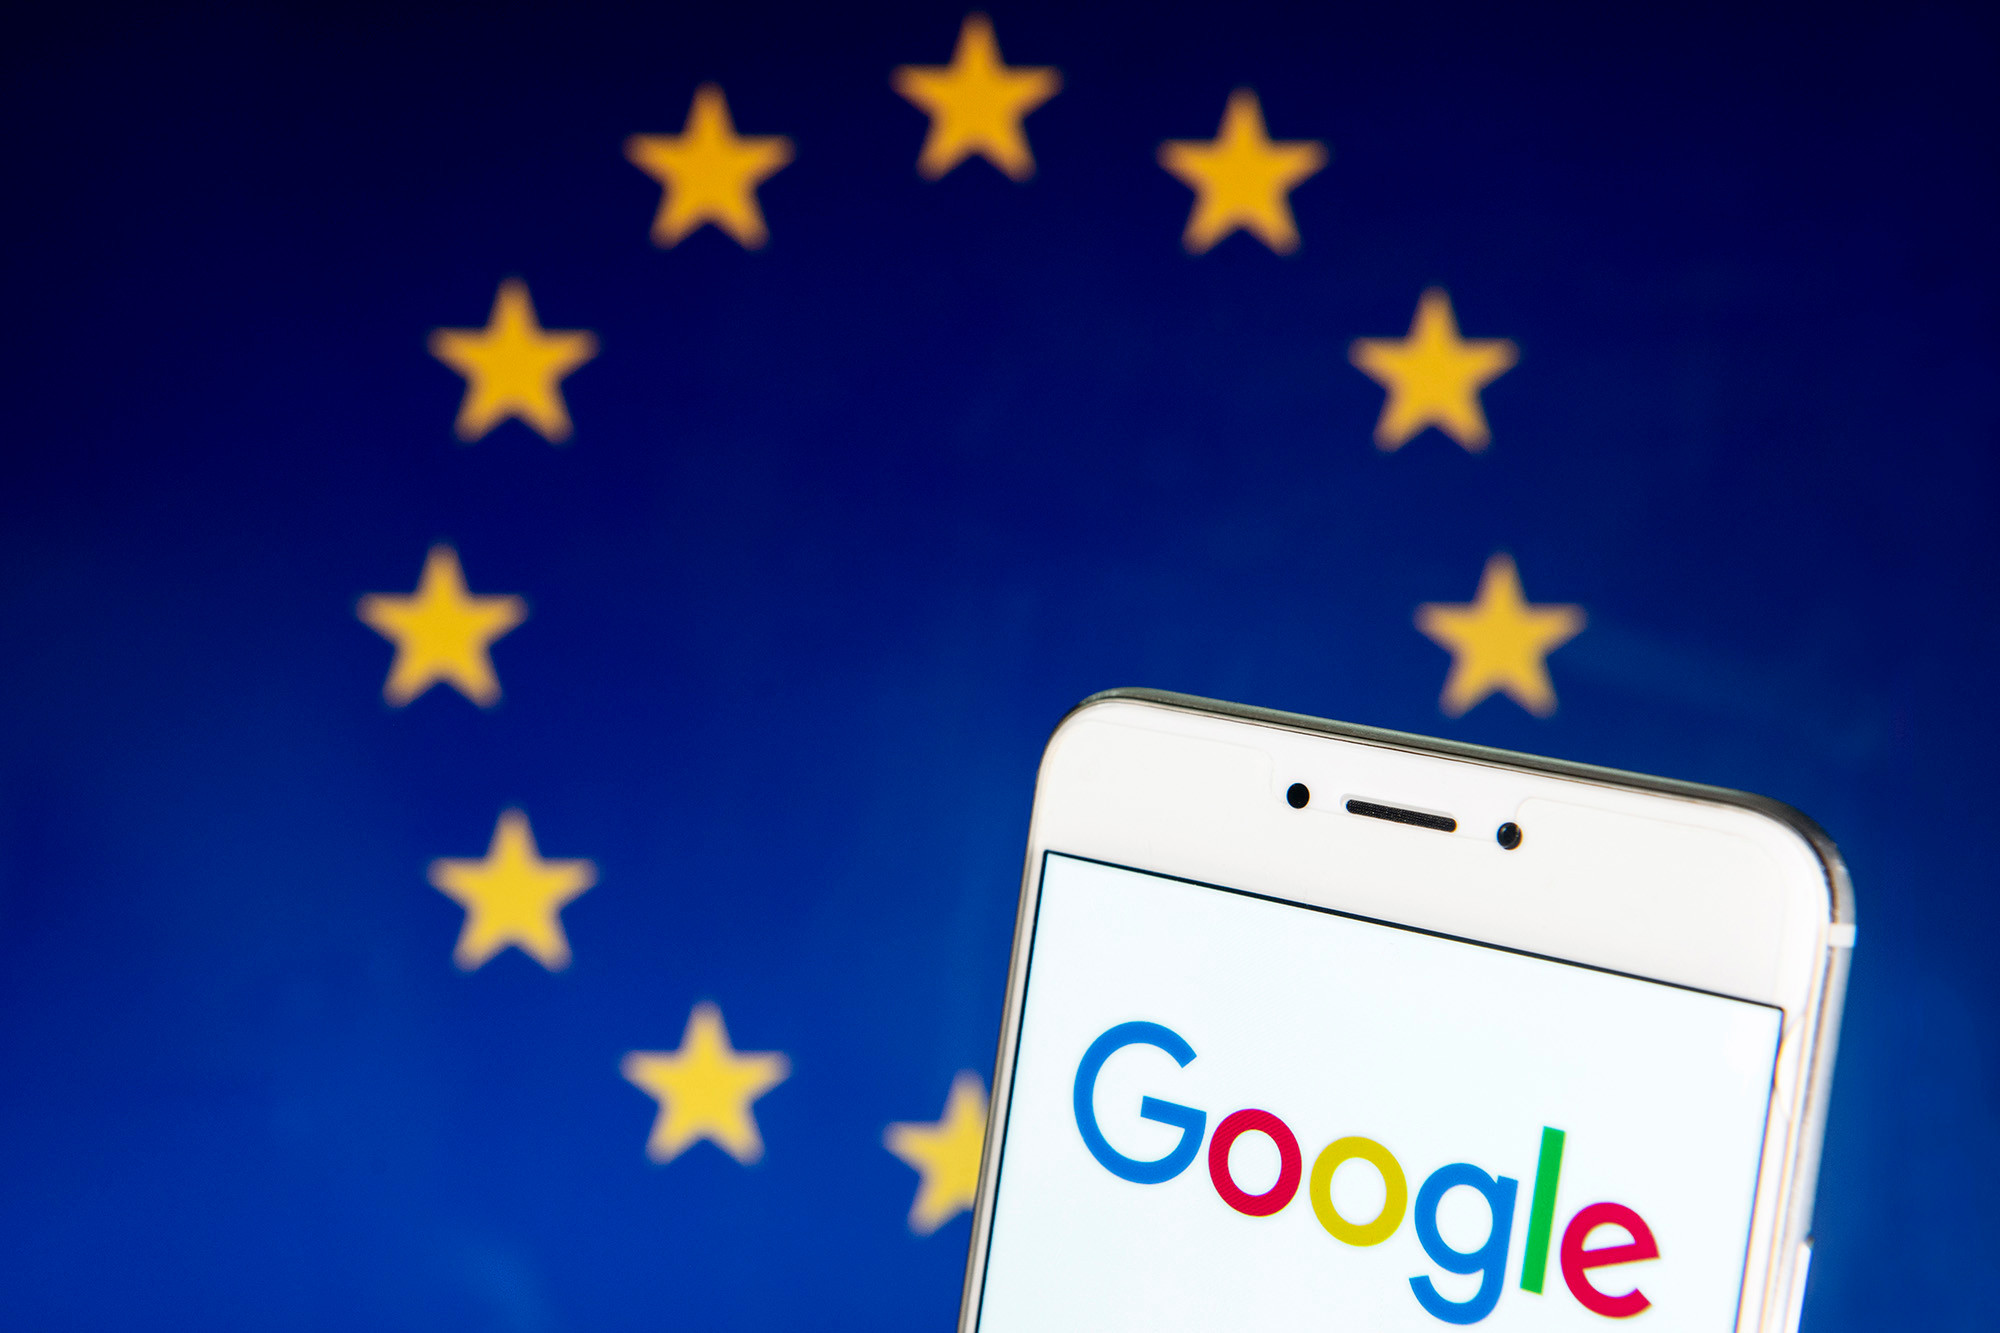 Fitbit google εξαγορά: Η Ευρωπαϊκή Επιτροπή ενέκρινε το deal μετά από έρευνα 4 μηνών